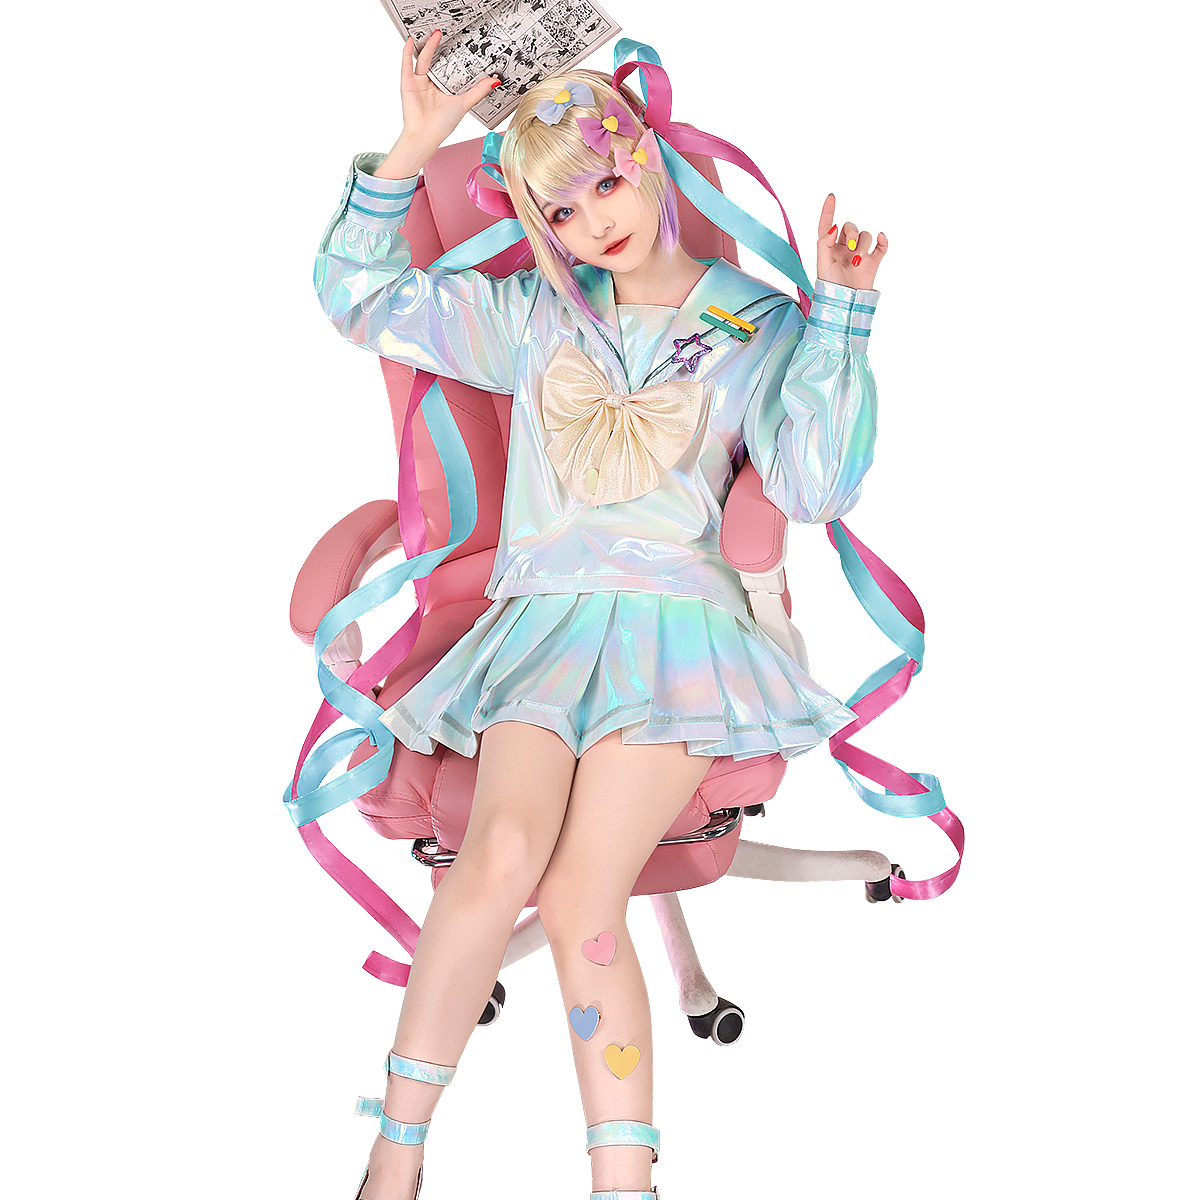 Needy Streamer Overload Needy Girl Overdose Angel-chan Riband  Cosplay Costume Dress